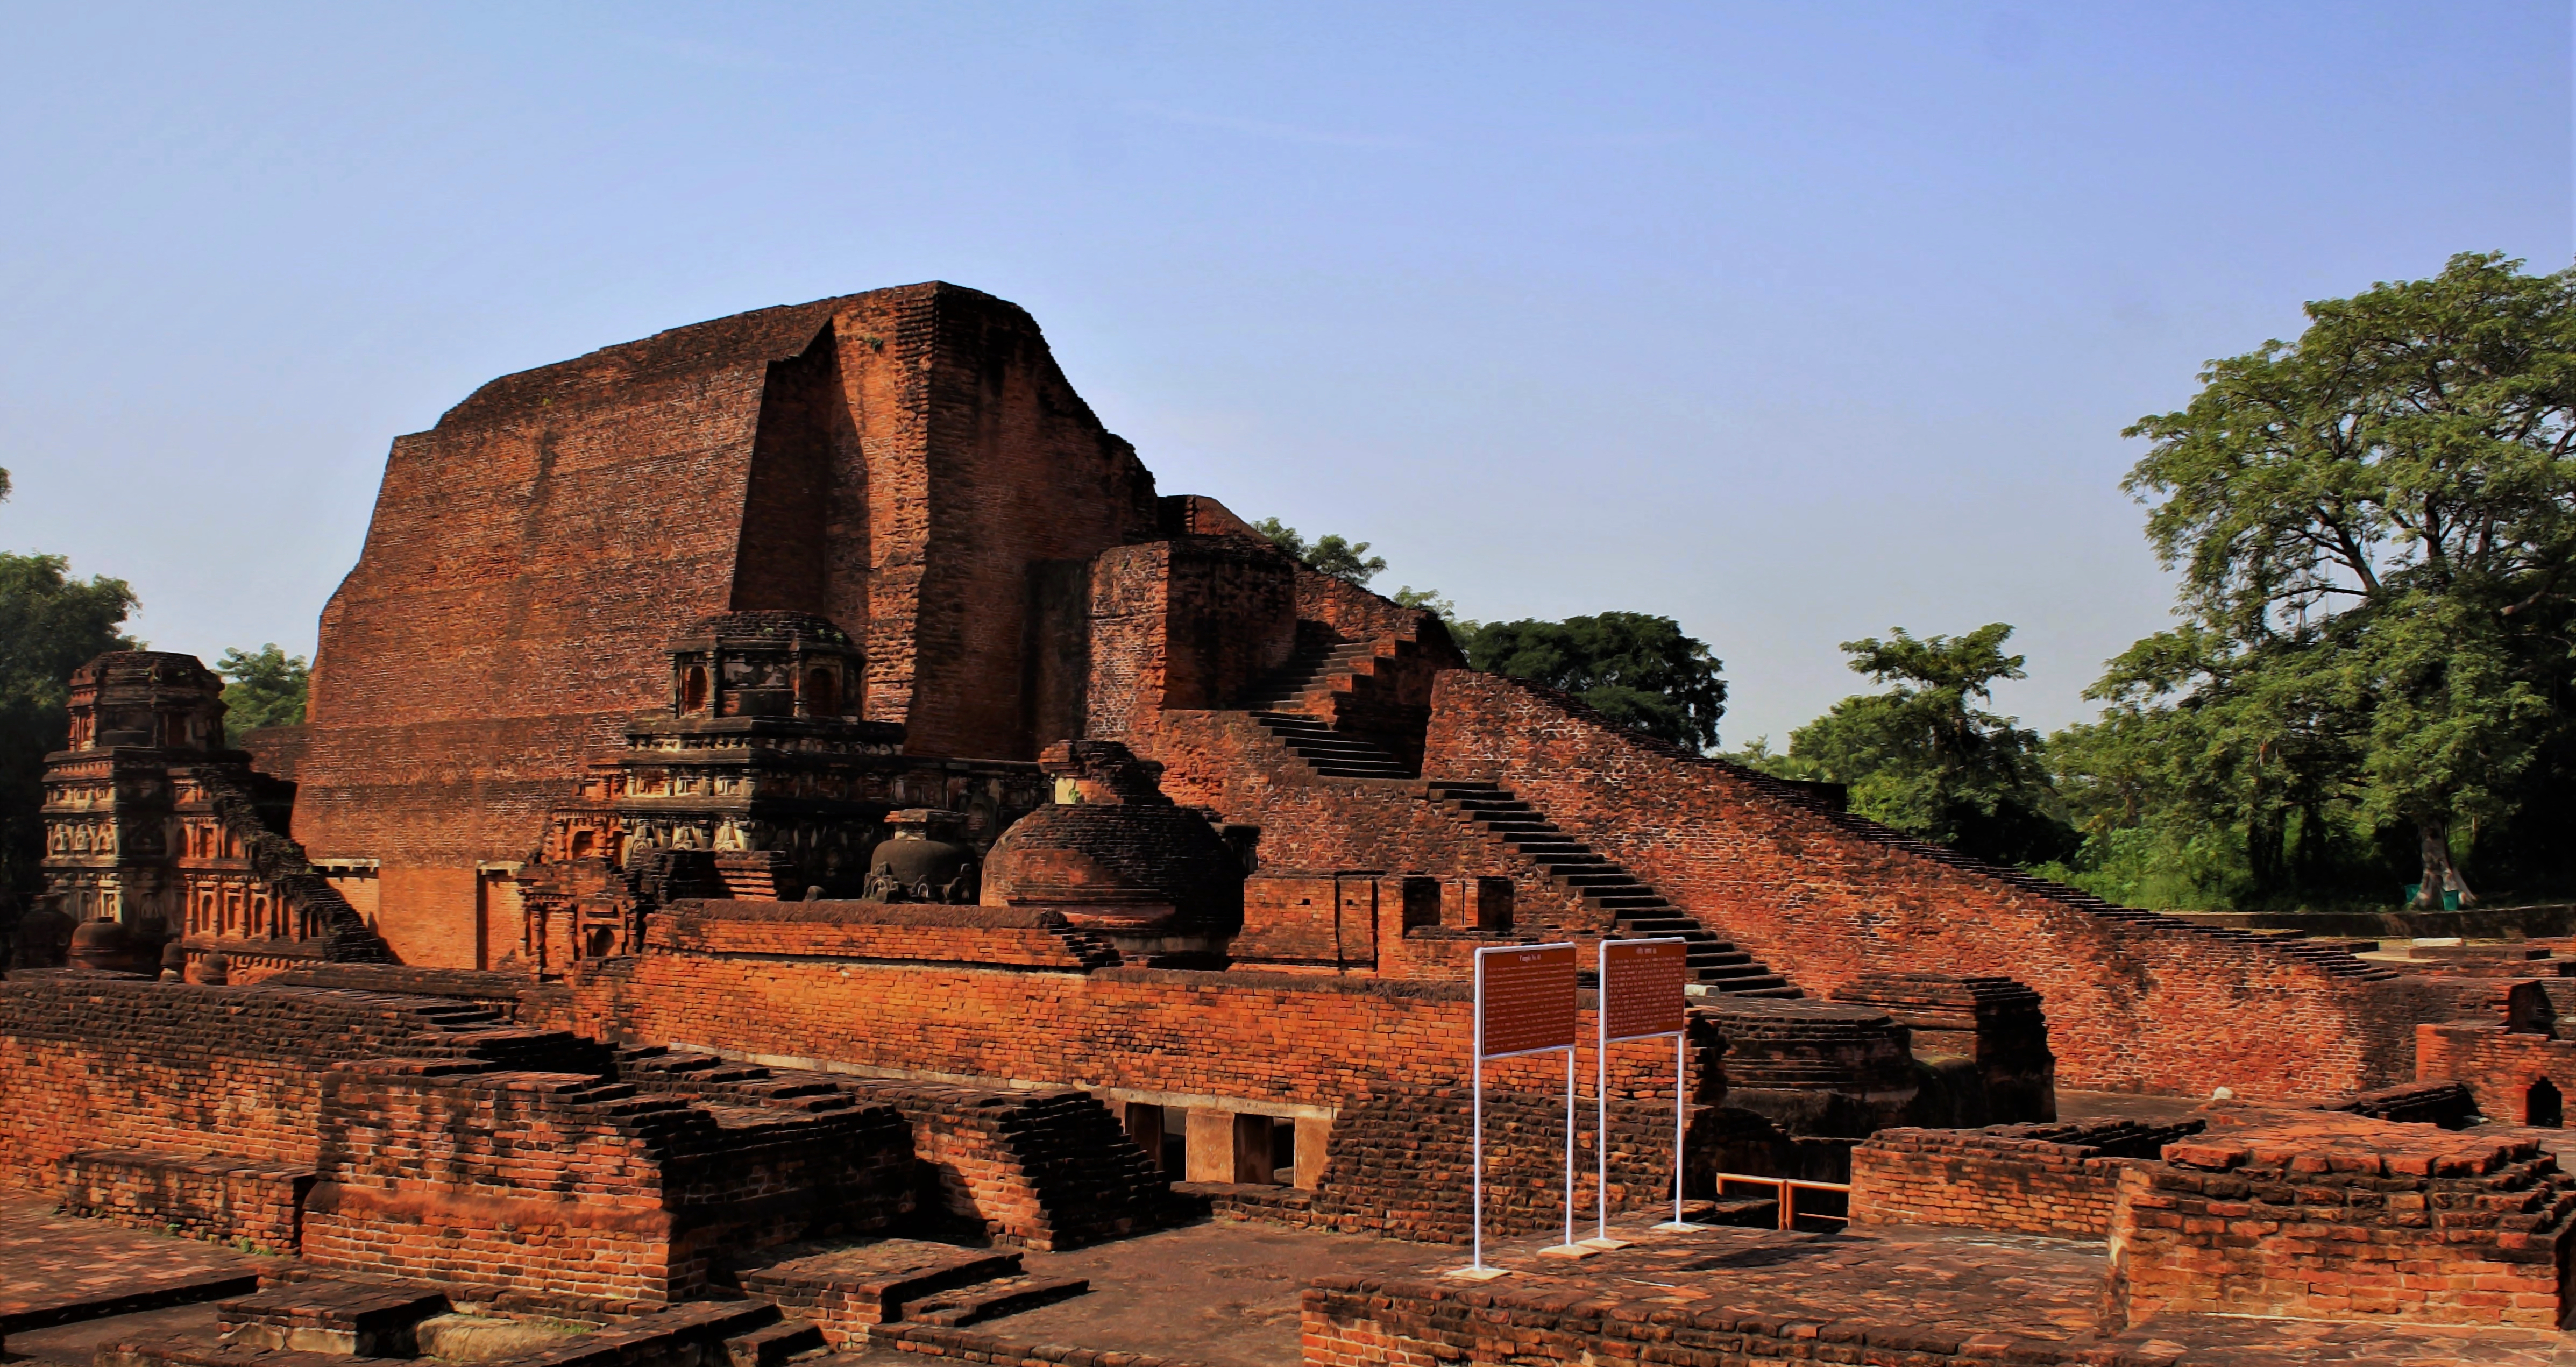 Nalanda - The Main Temple (Stupa No. 3), also claimed as Sariputra’s Stupa